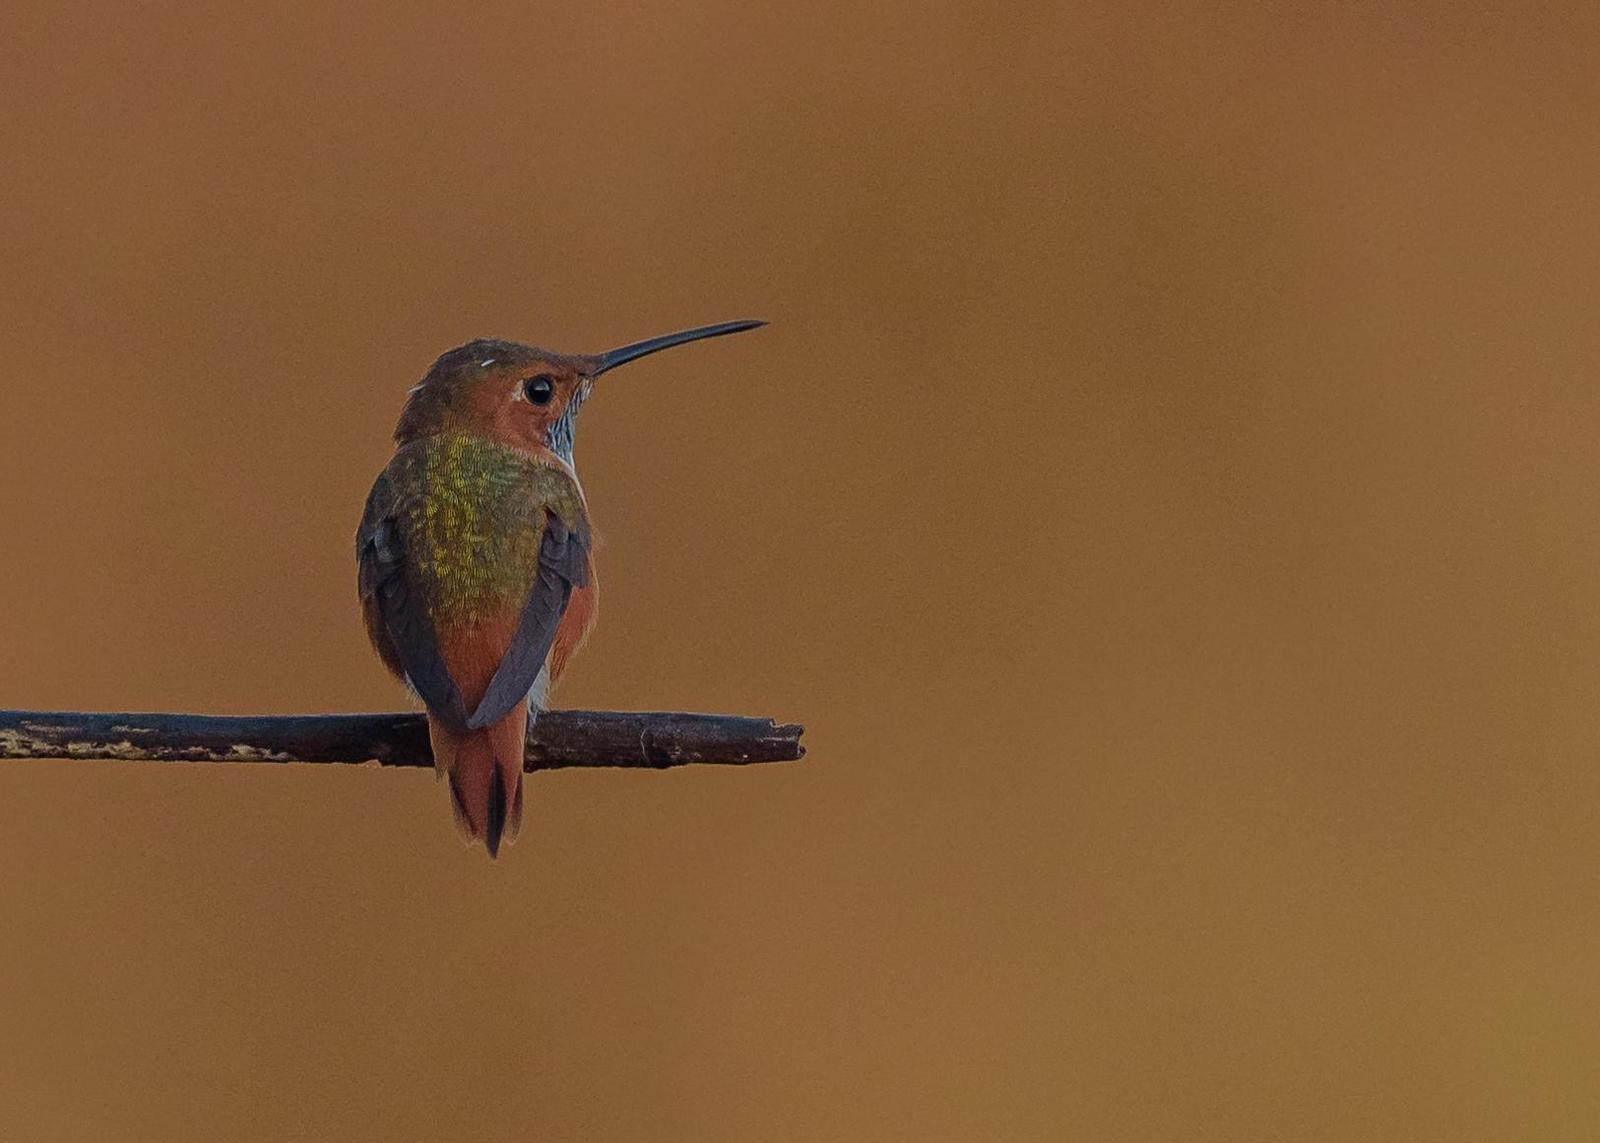 Allen's Hummingbird Photo by Keshava Mysore